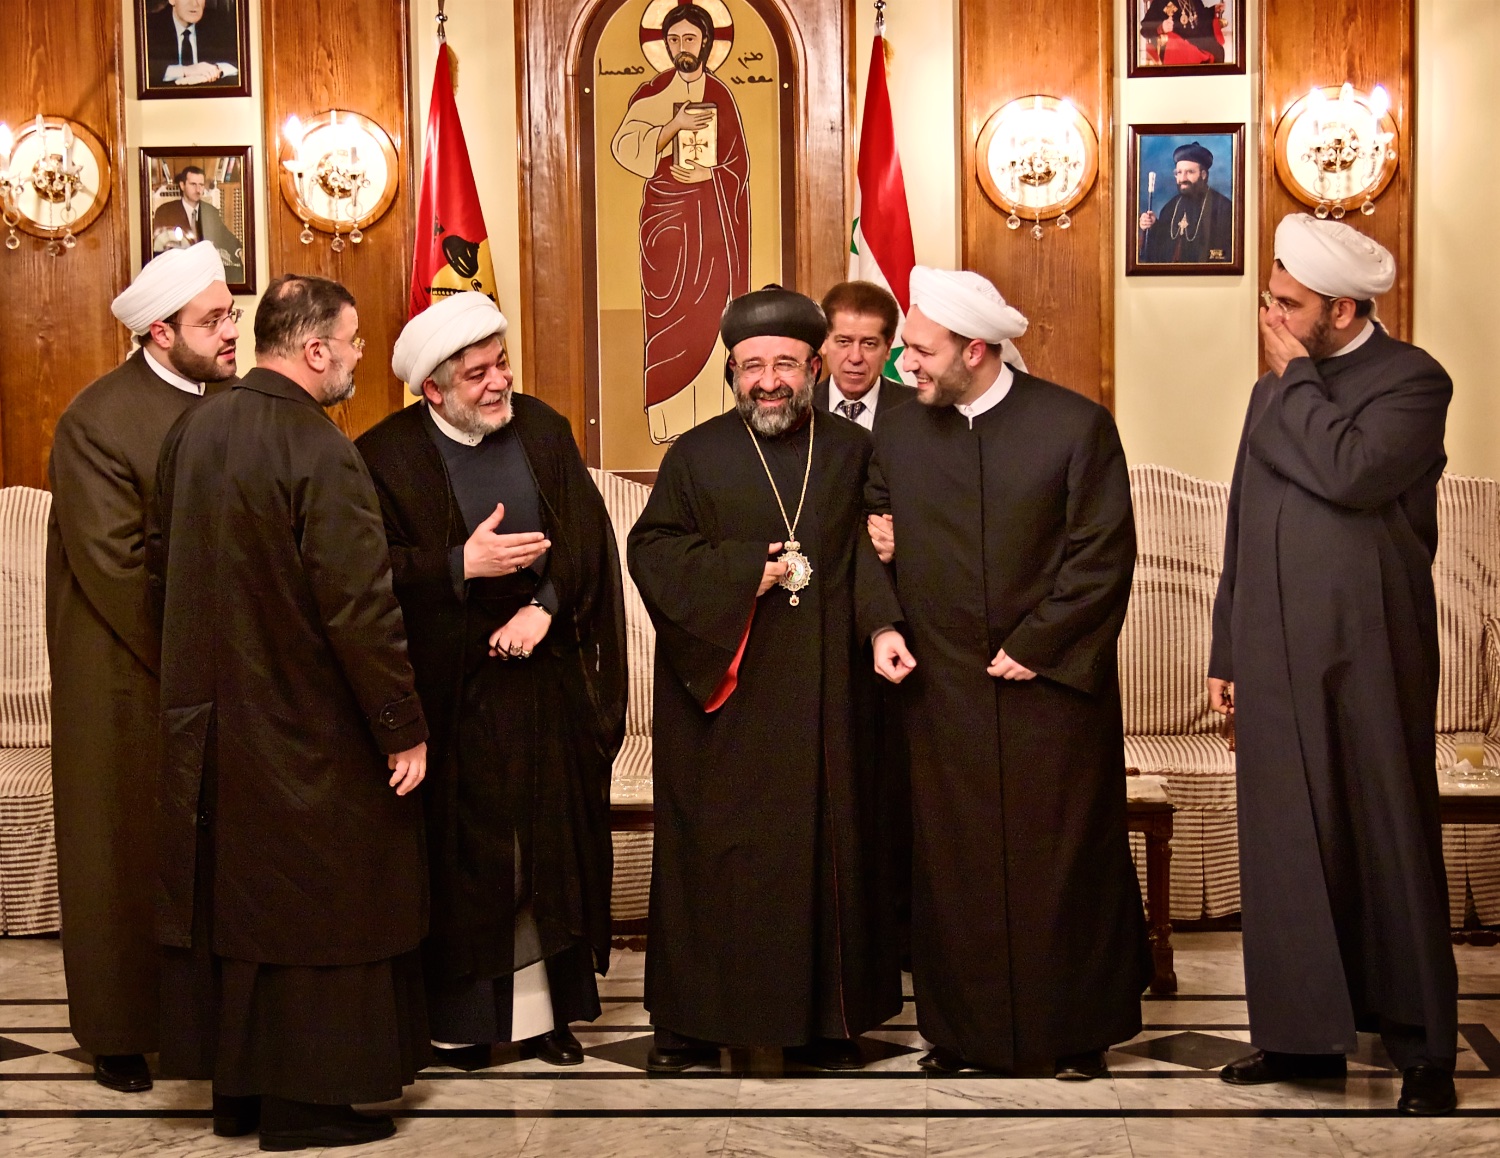  Syriac Orthodox Archdiocese of Aleppo - Interfaith Leadership&nbsp; 